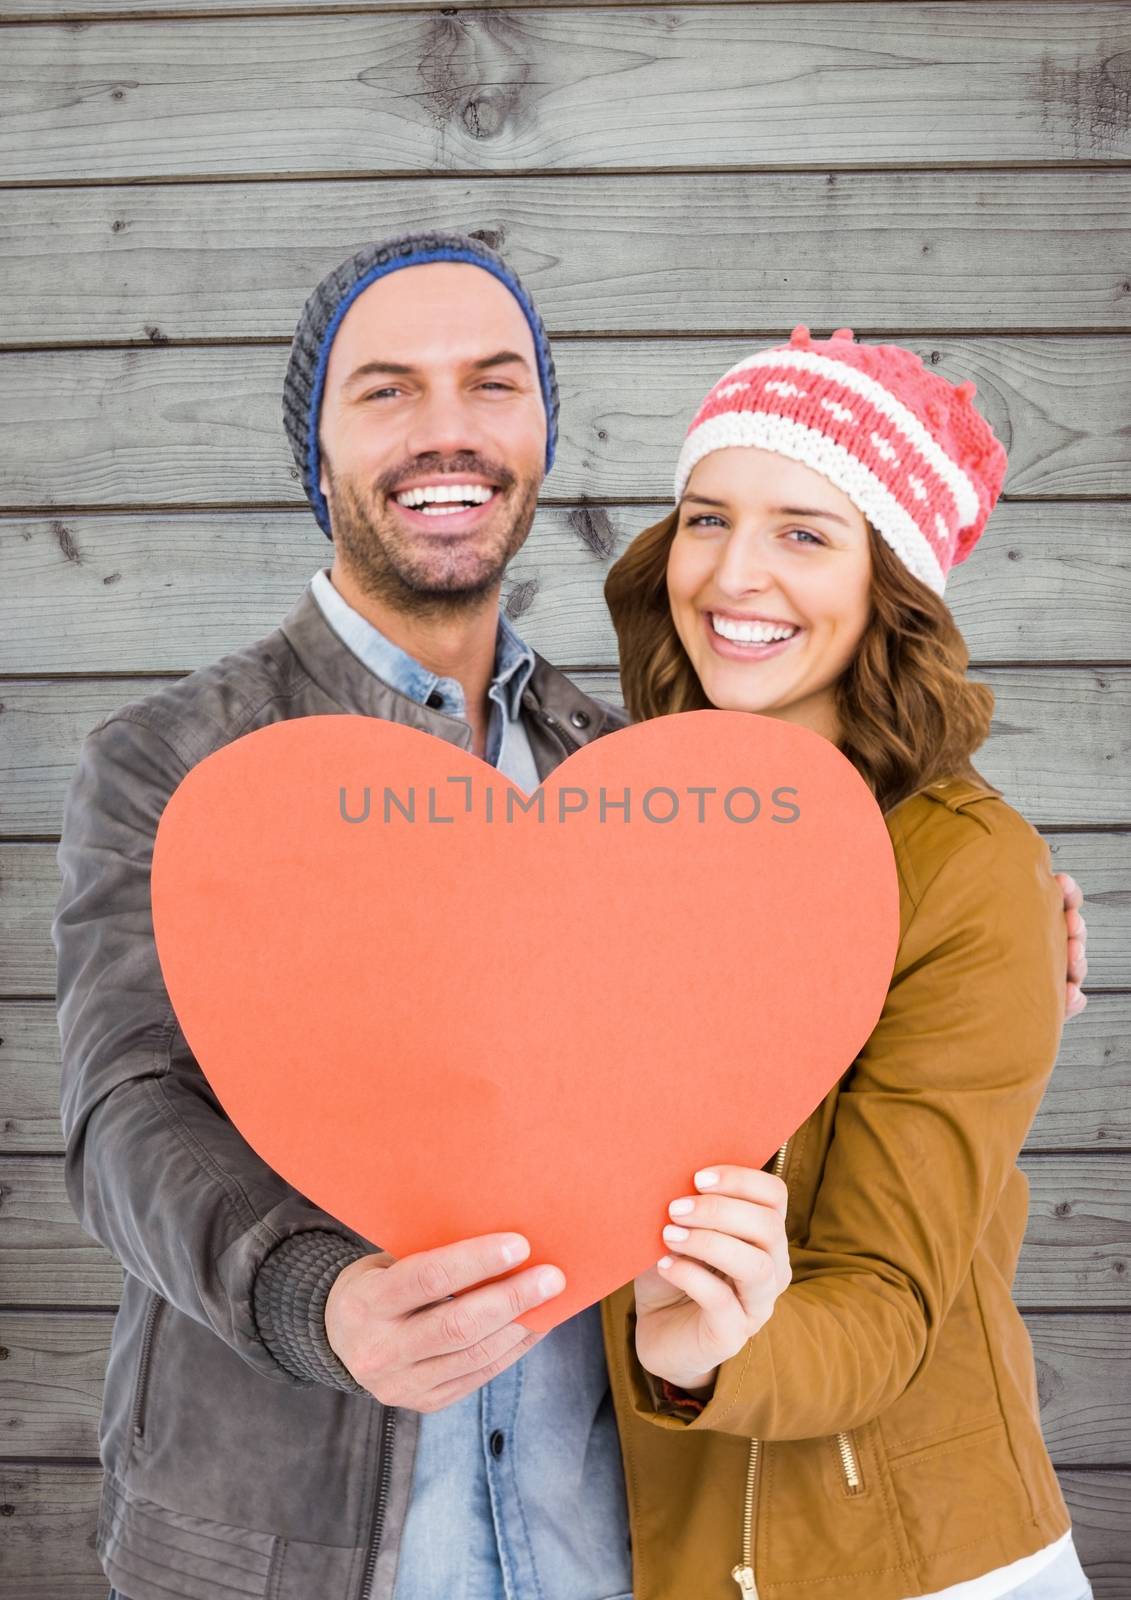 Romantic couple holding a heart by Wavebreakmedia